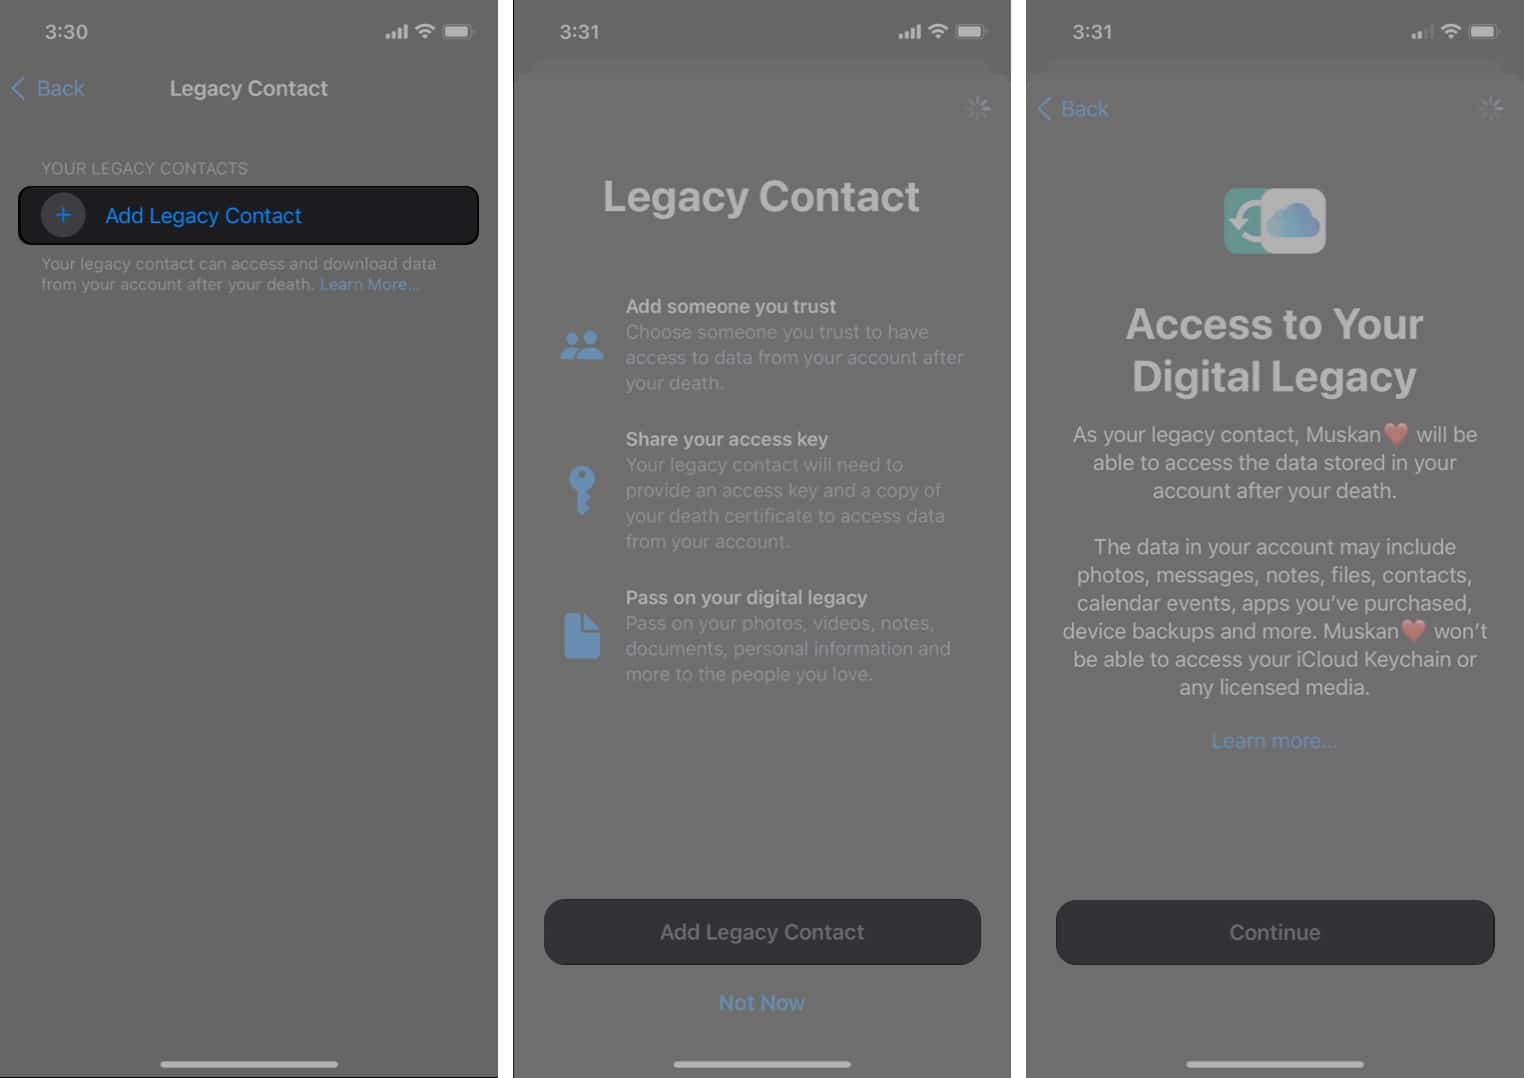 Add Digital Legacy contact on iPhone running iOS 15